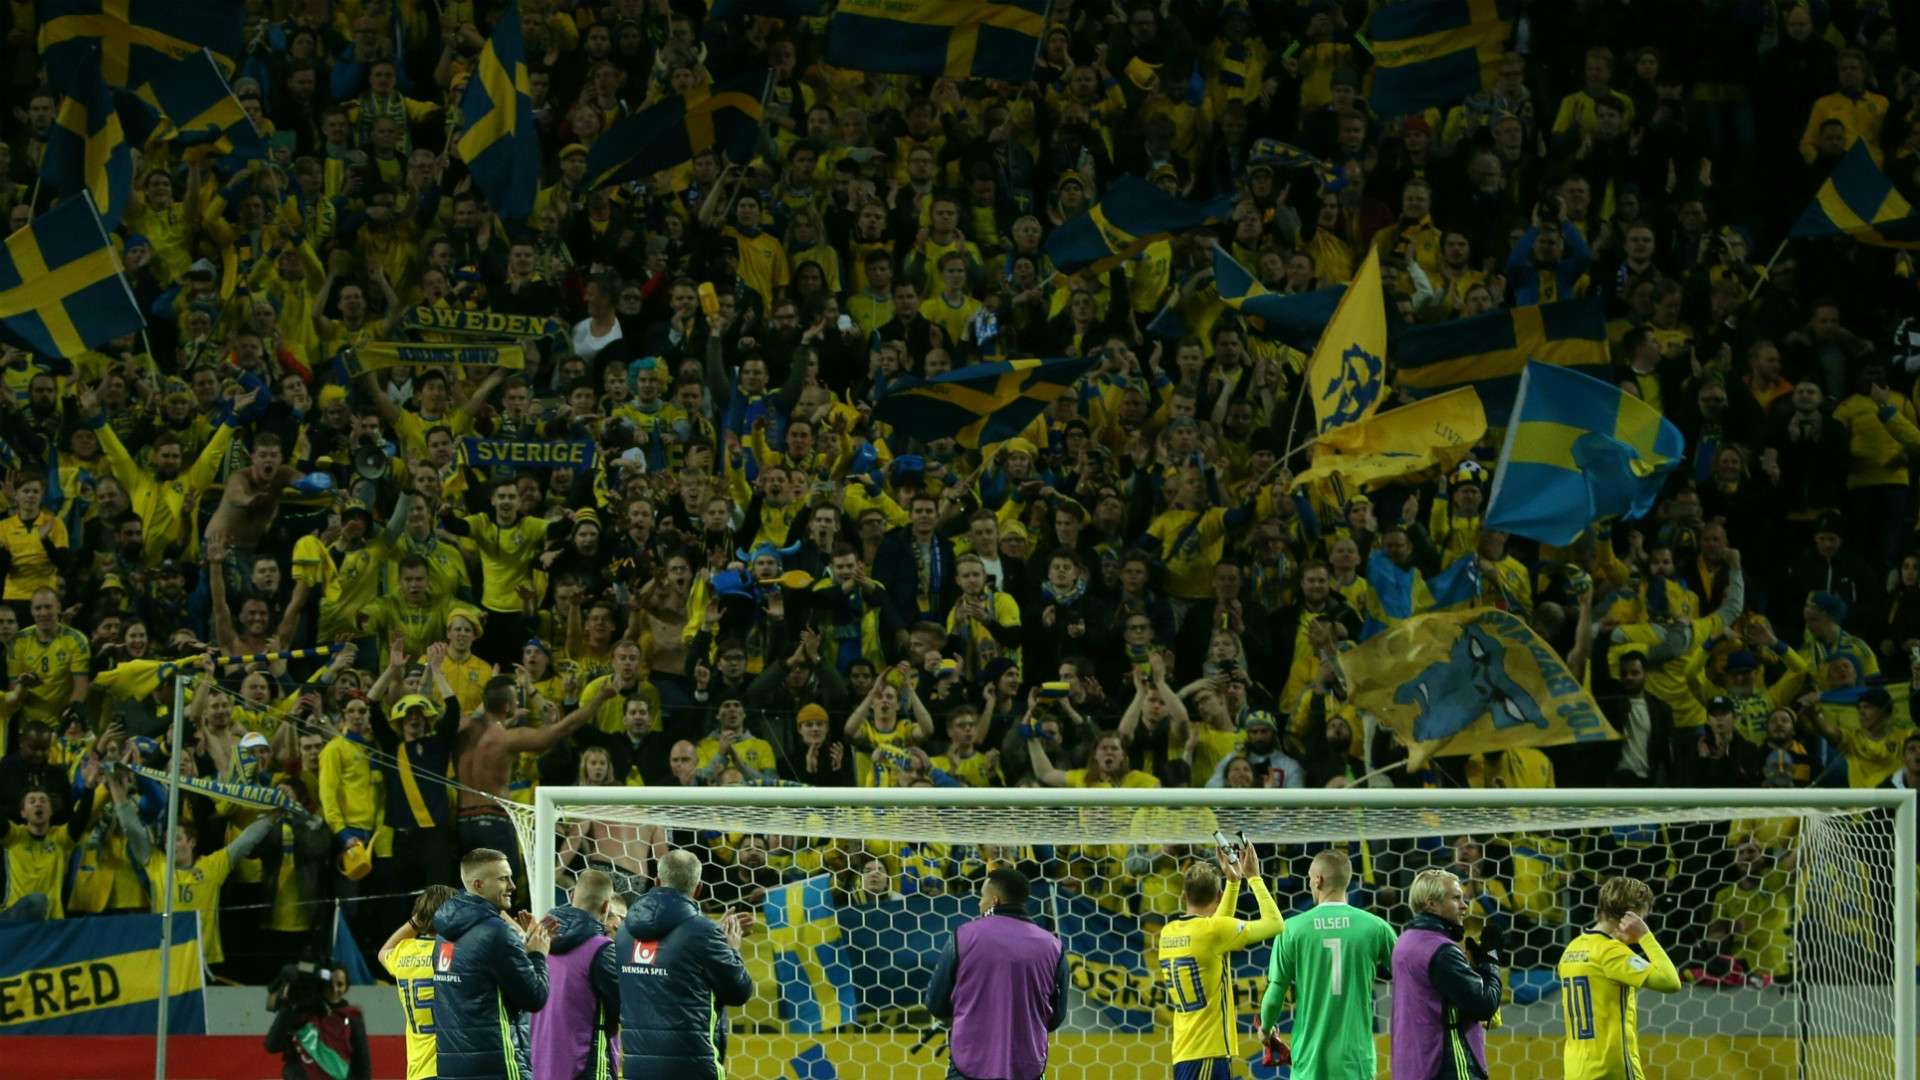 Sweden Italy swedish fans